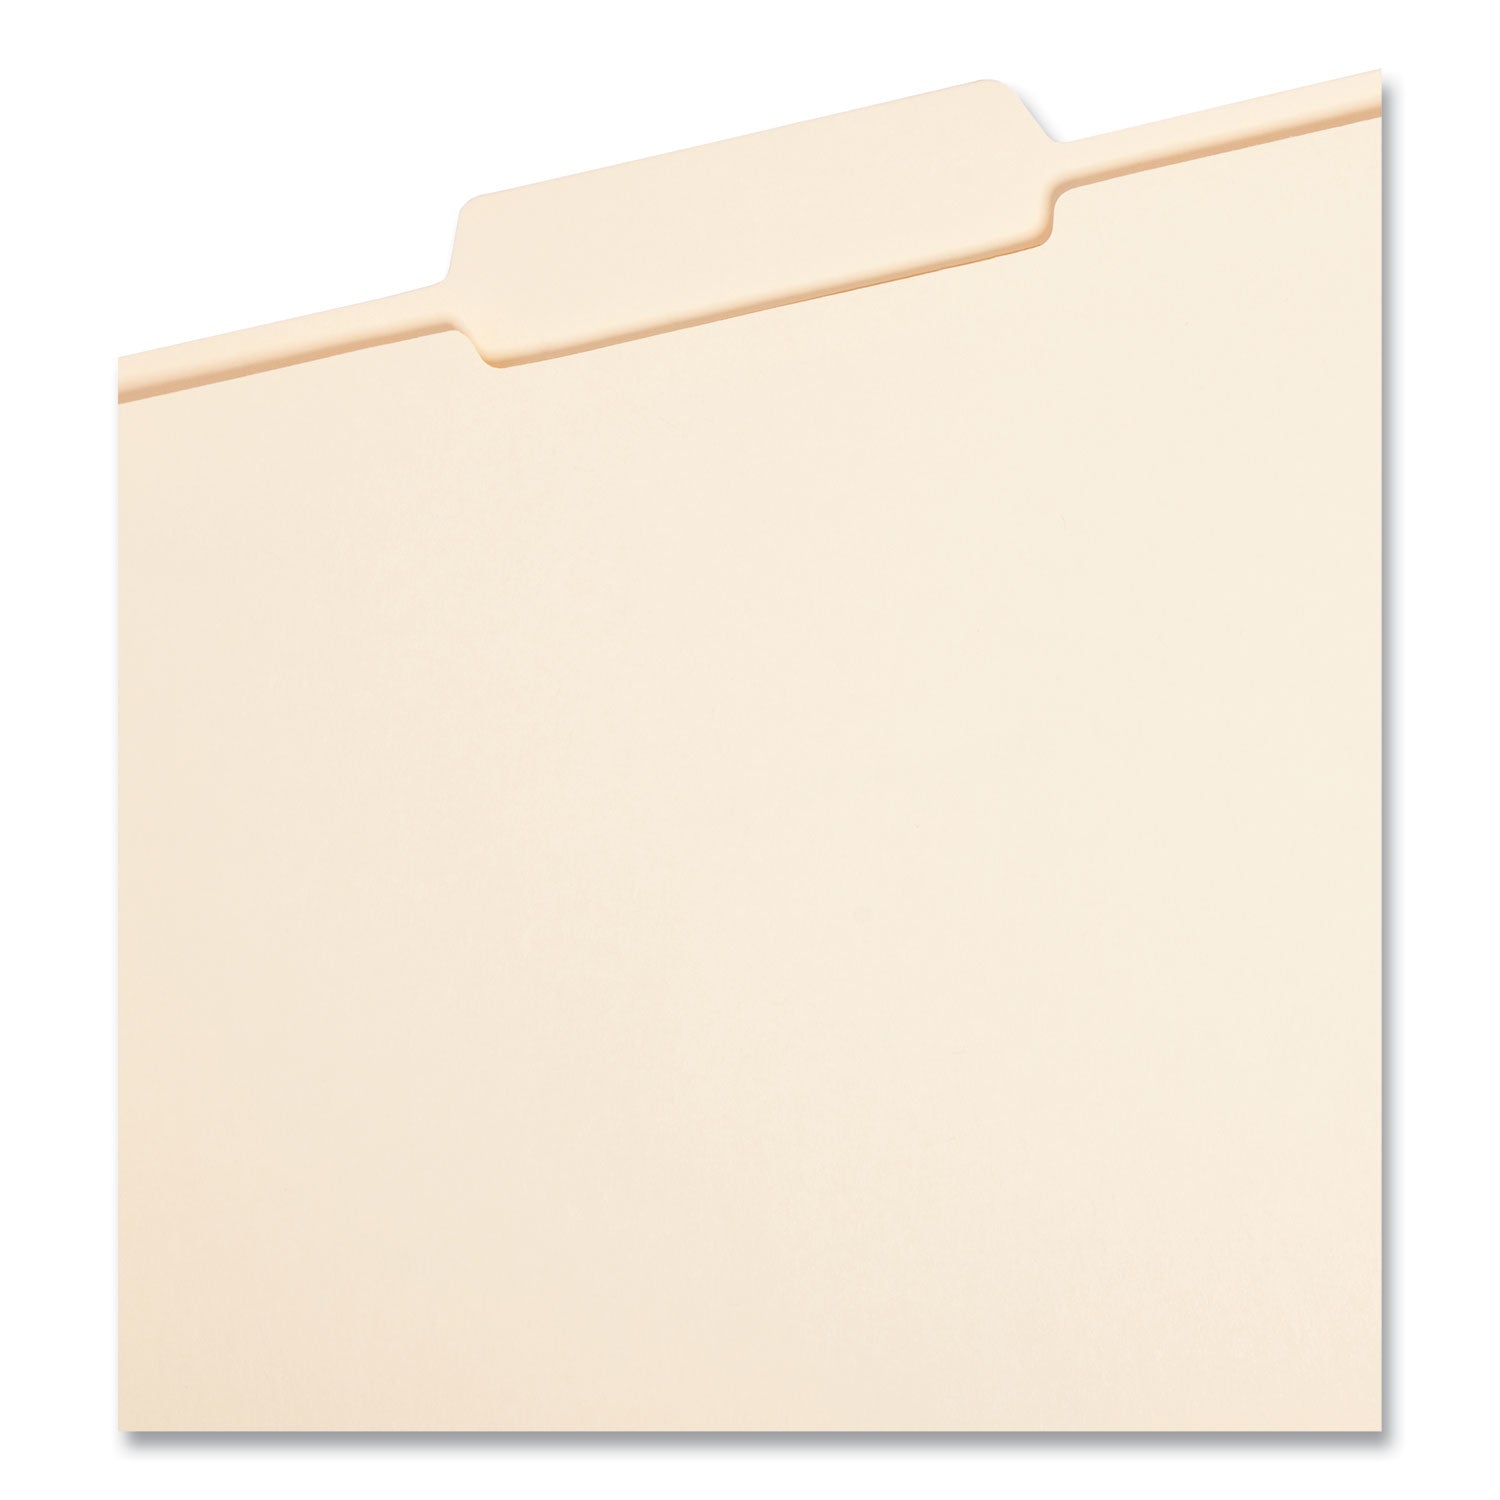 Reinforced Tab Manila File Folders, 1/3-Cut Tabs: Center Position, Letter Size, 0.75" Expansion, 11-pt Manila, 100/Box - 